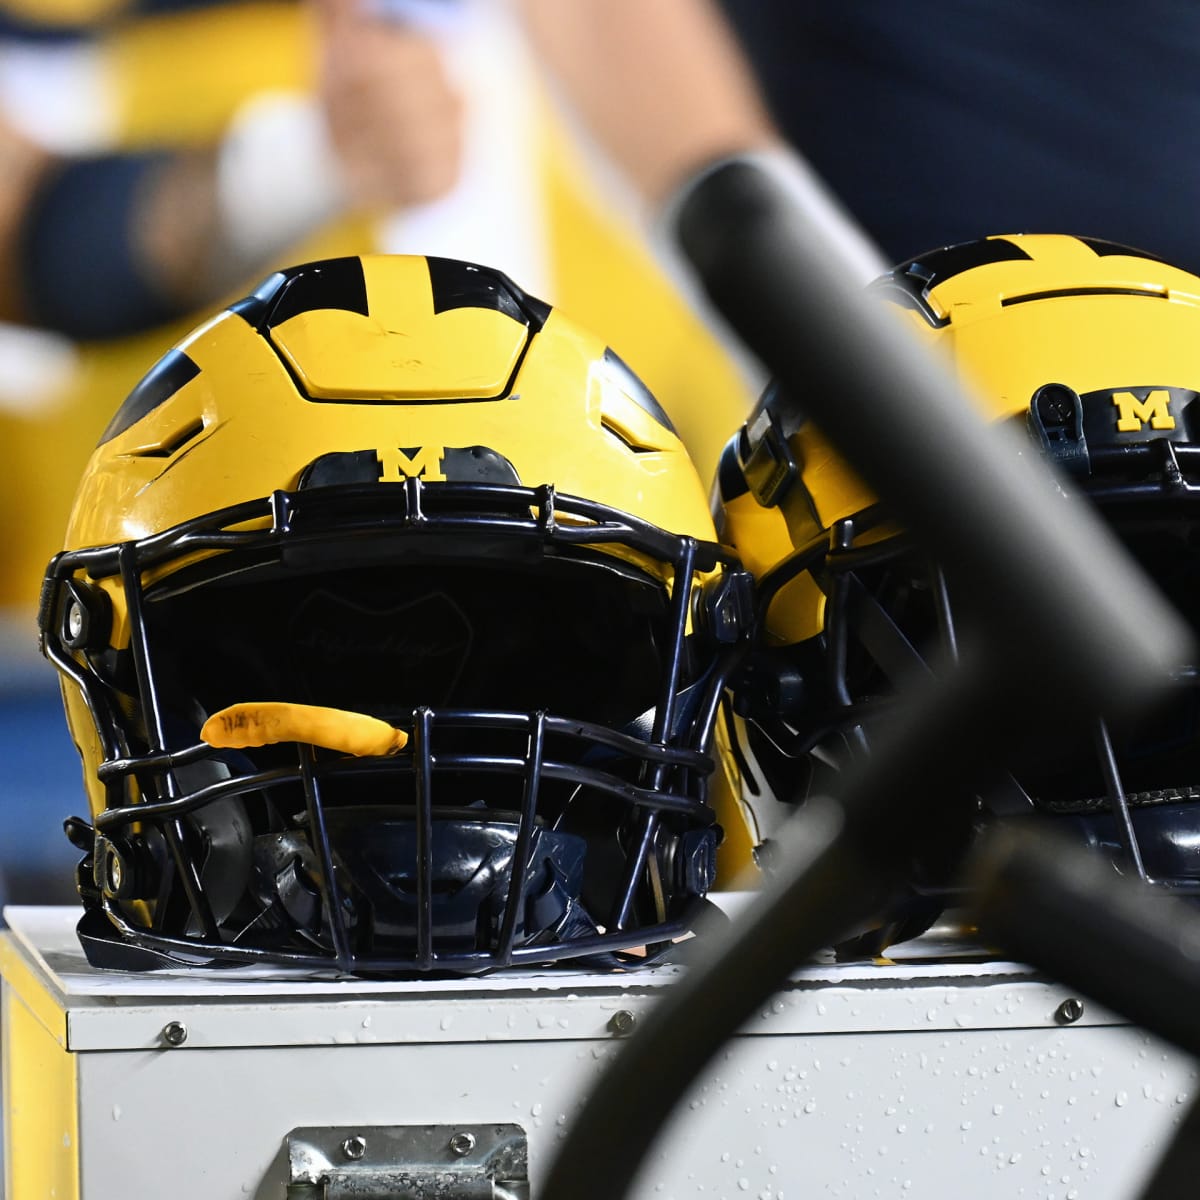 Black & Yellow Football Helmet Straw Topper – SS Transfers